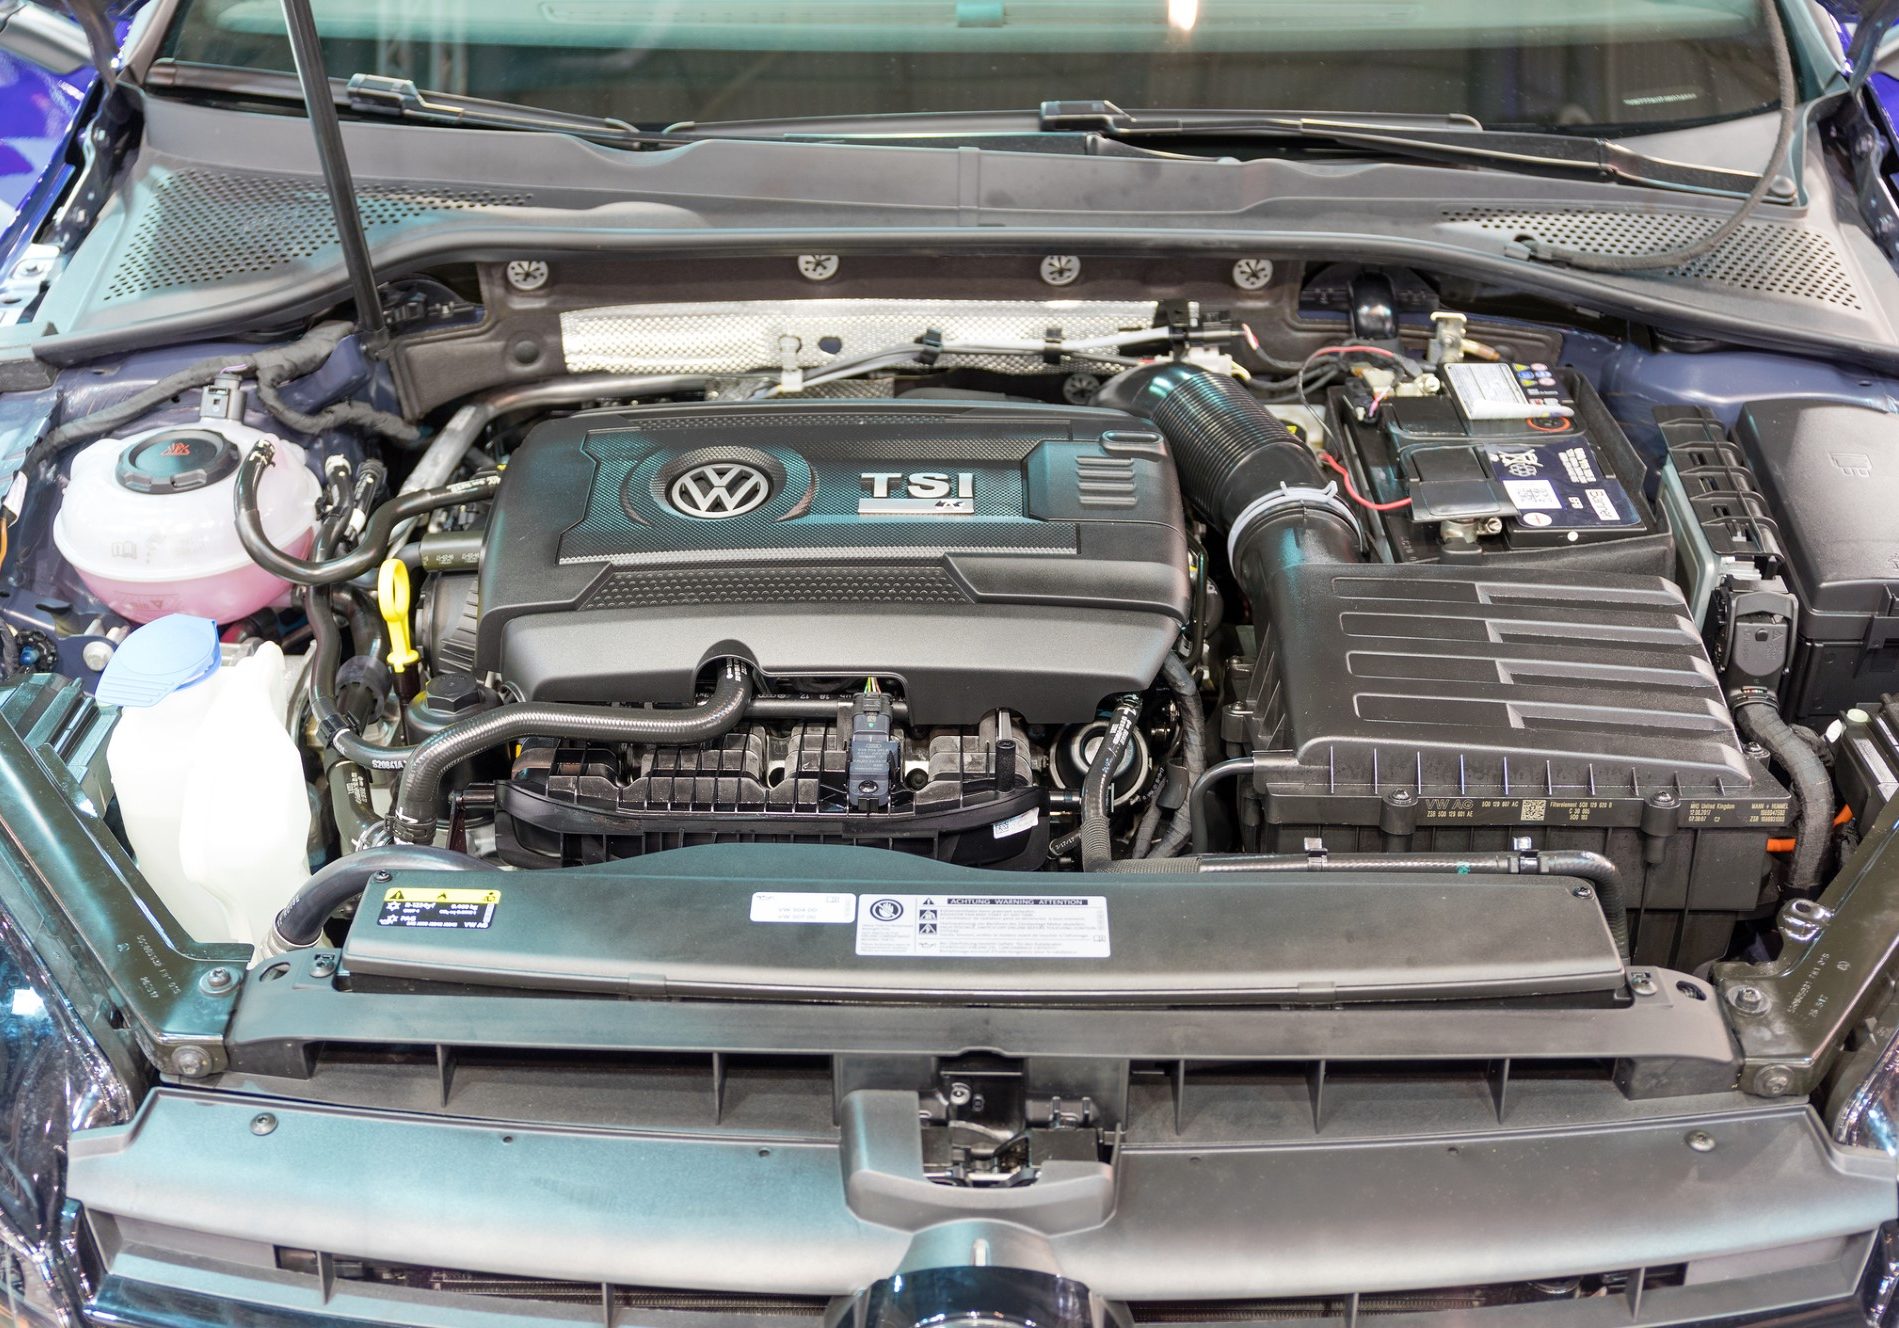 Volkswagen TSI engine